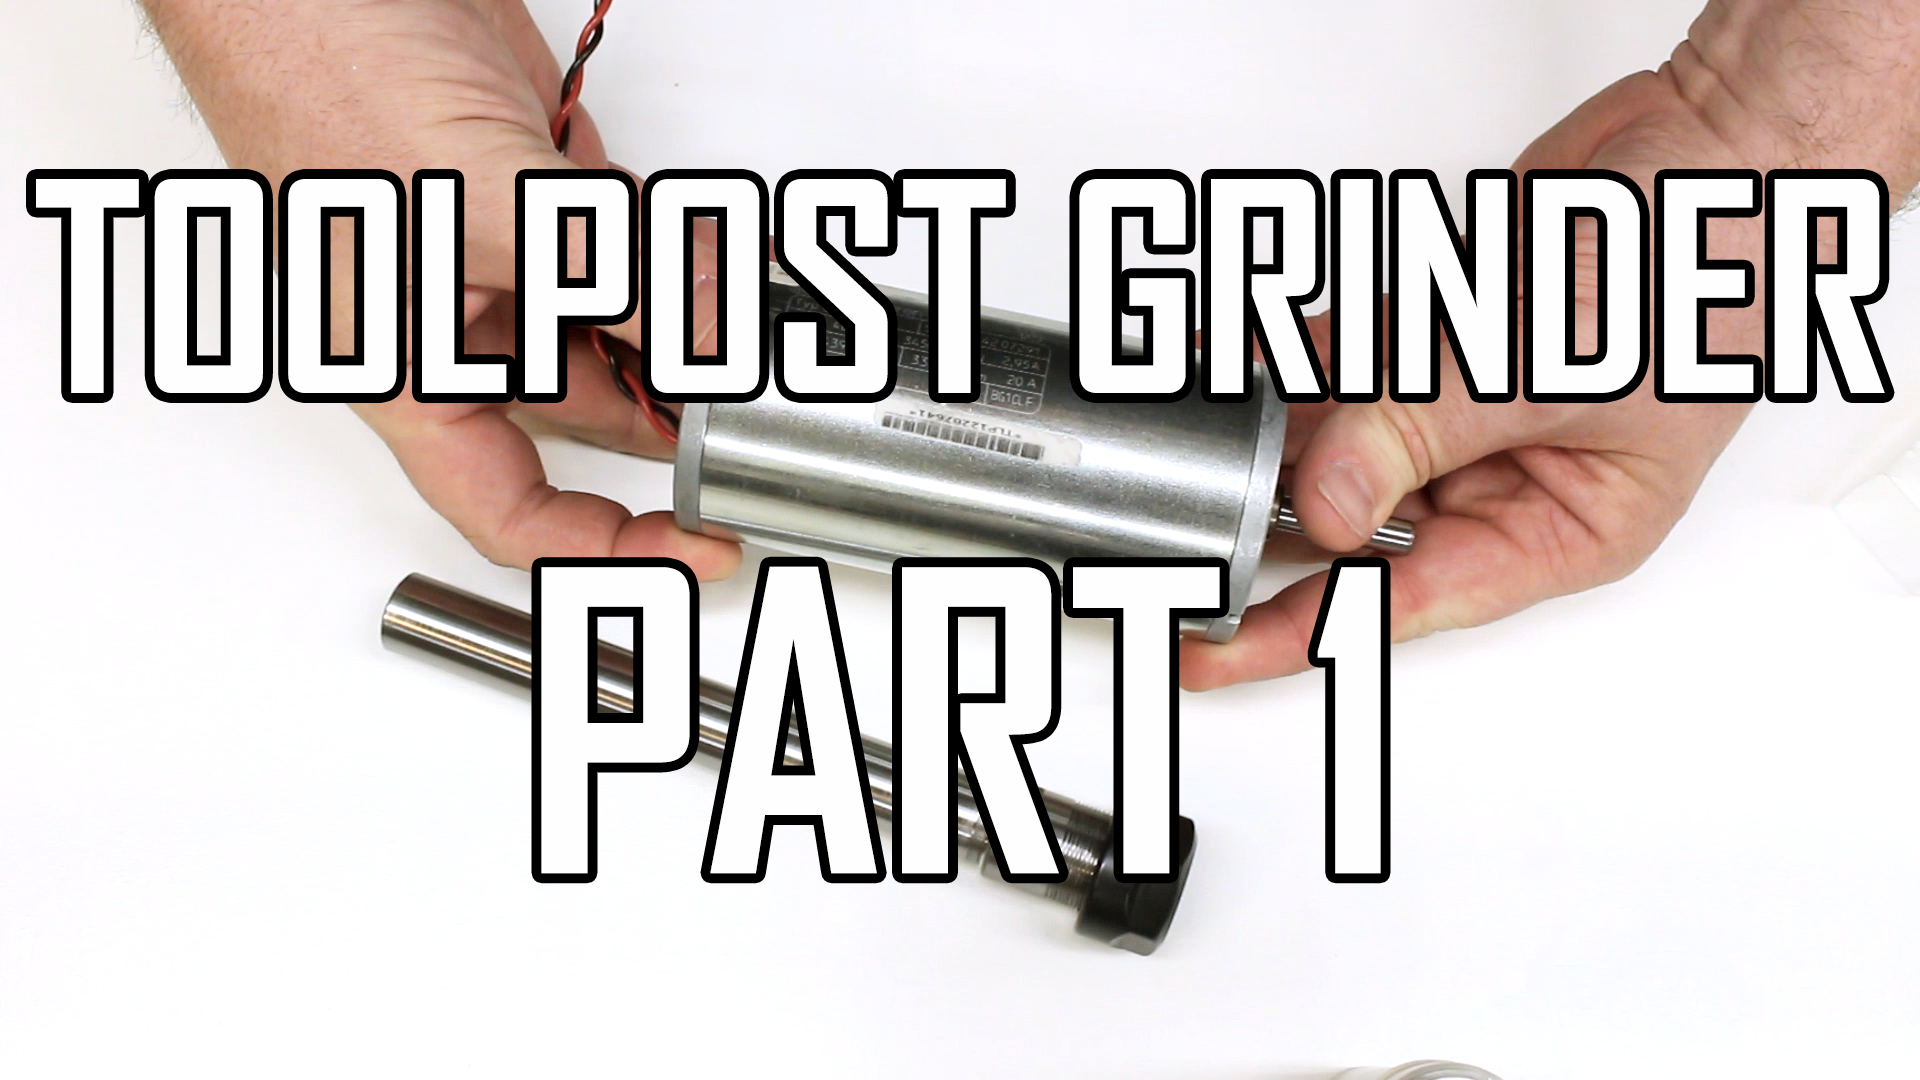 Toolpost Grinder Build Part 1: Introduction